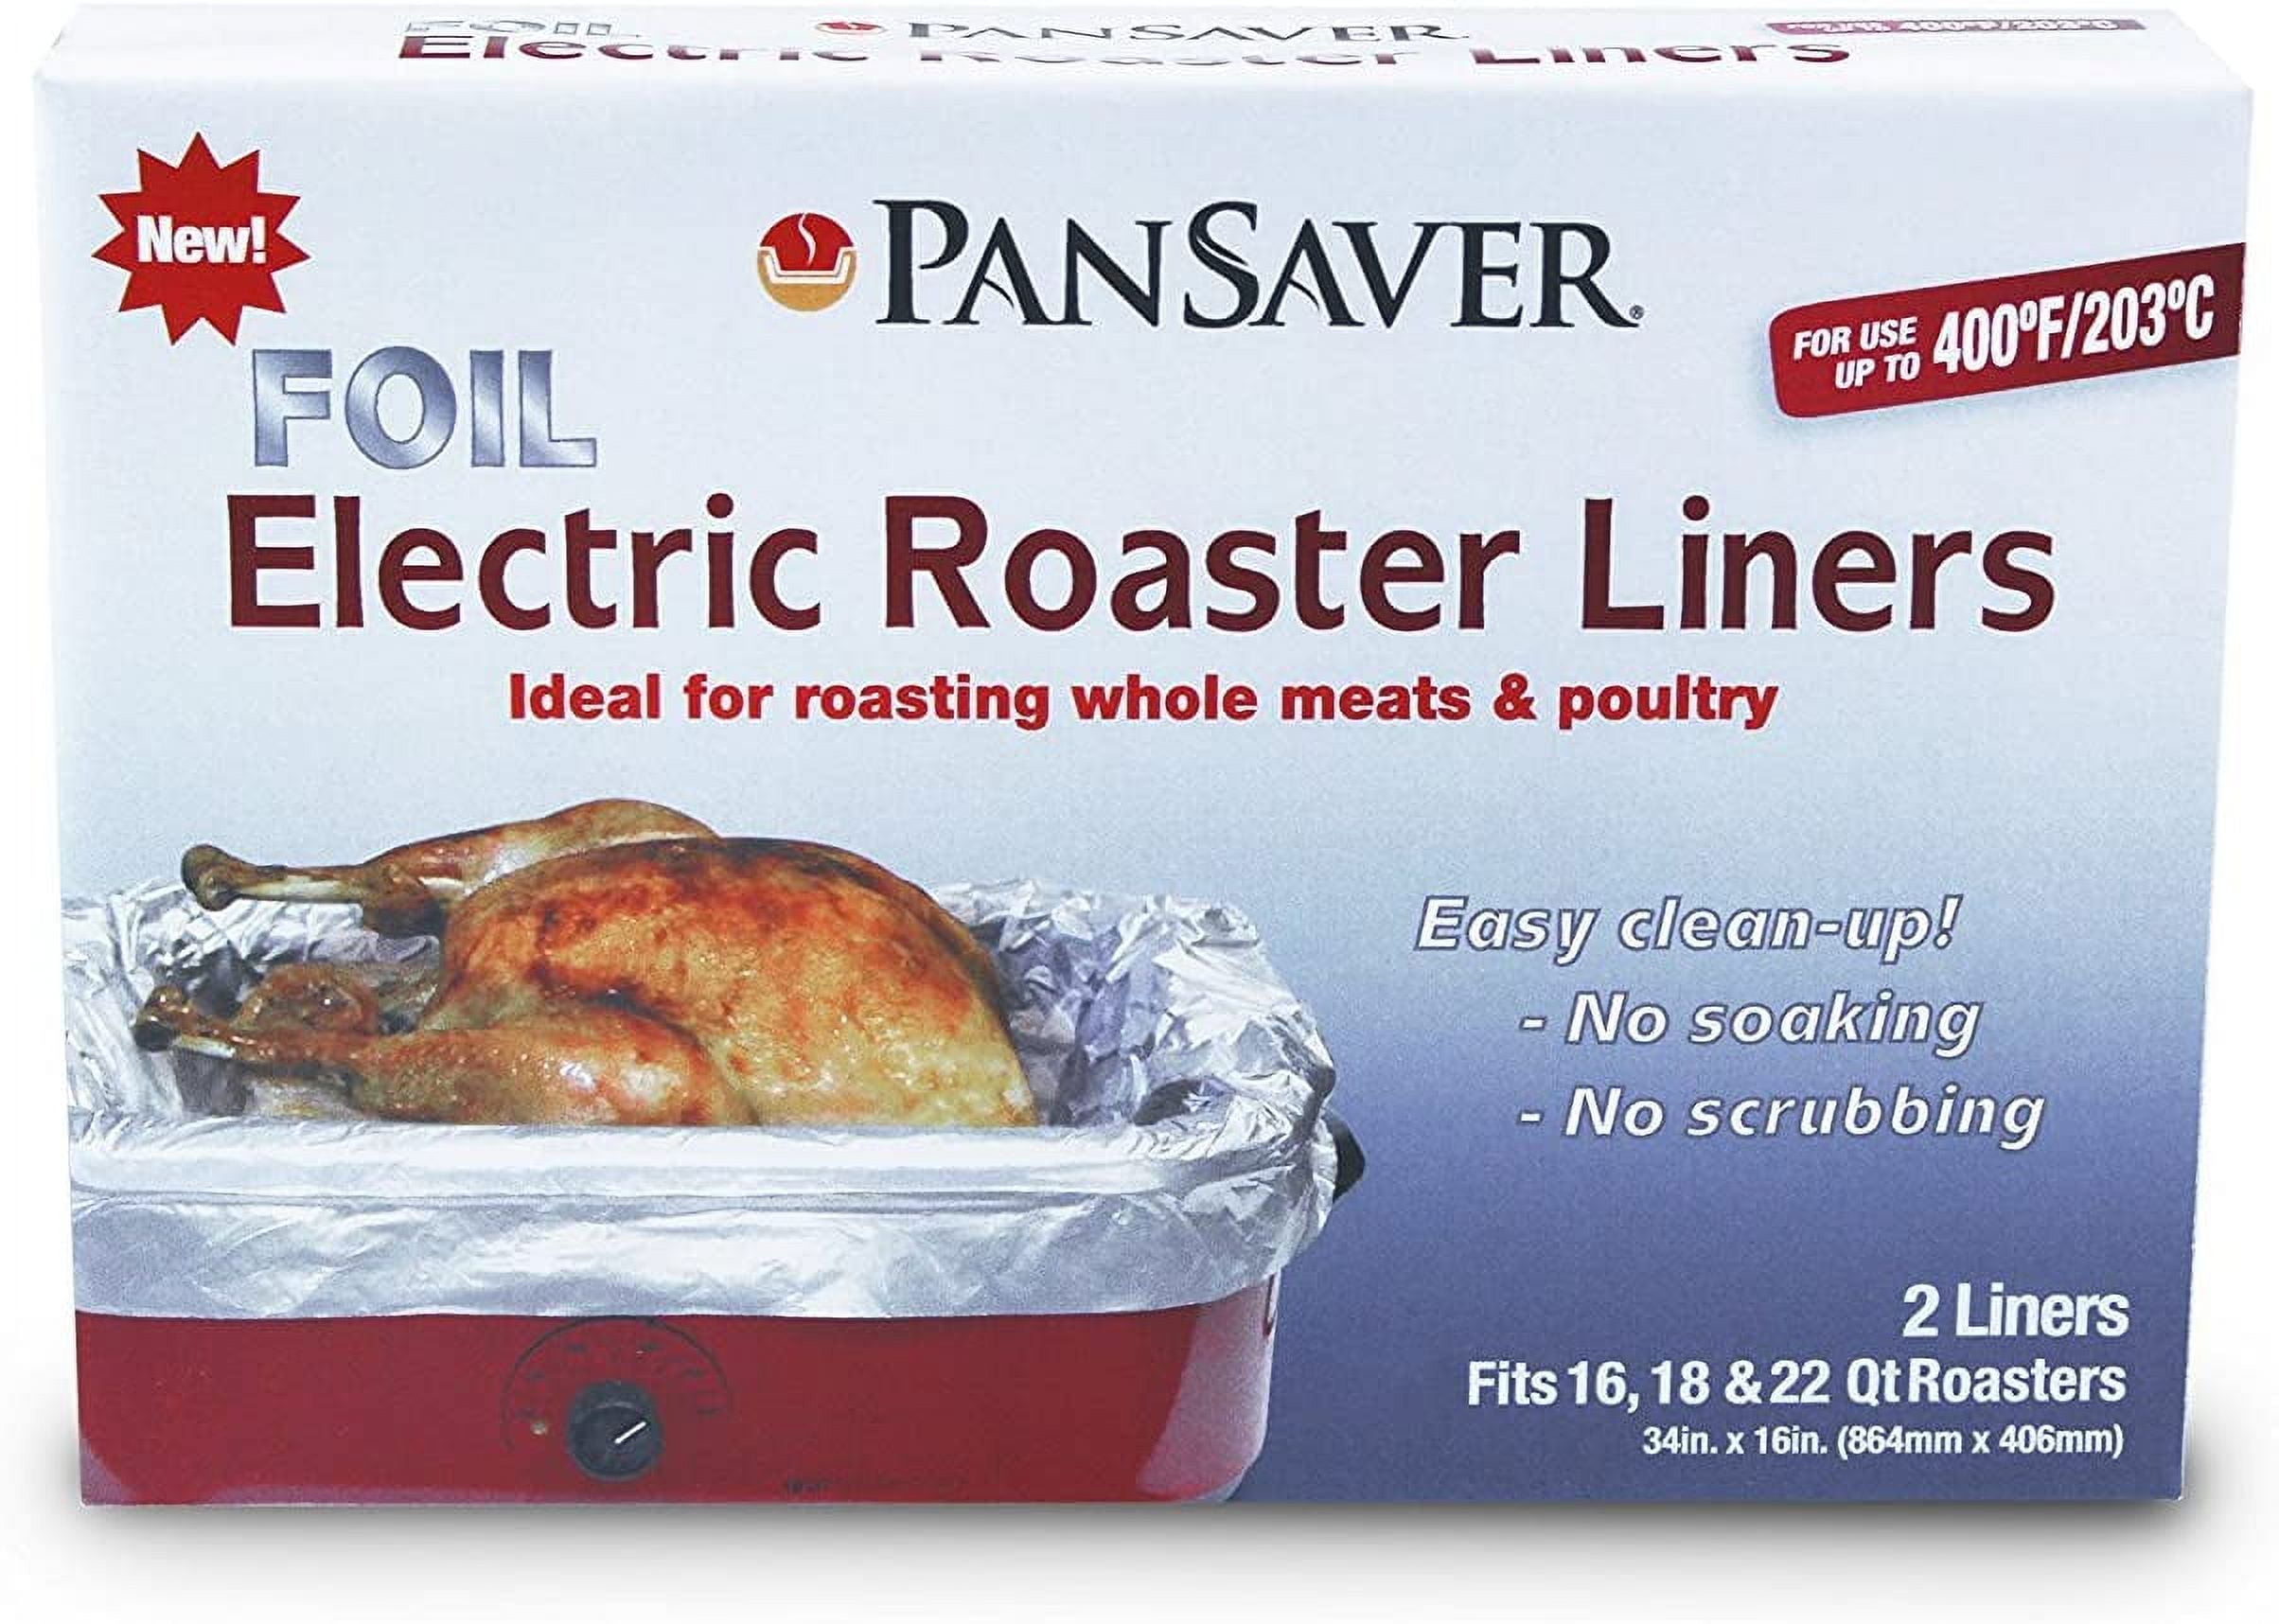 PanSaver Oven Safe Pan Liners 